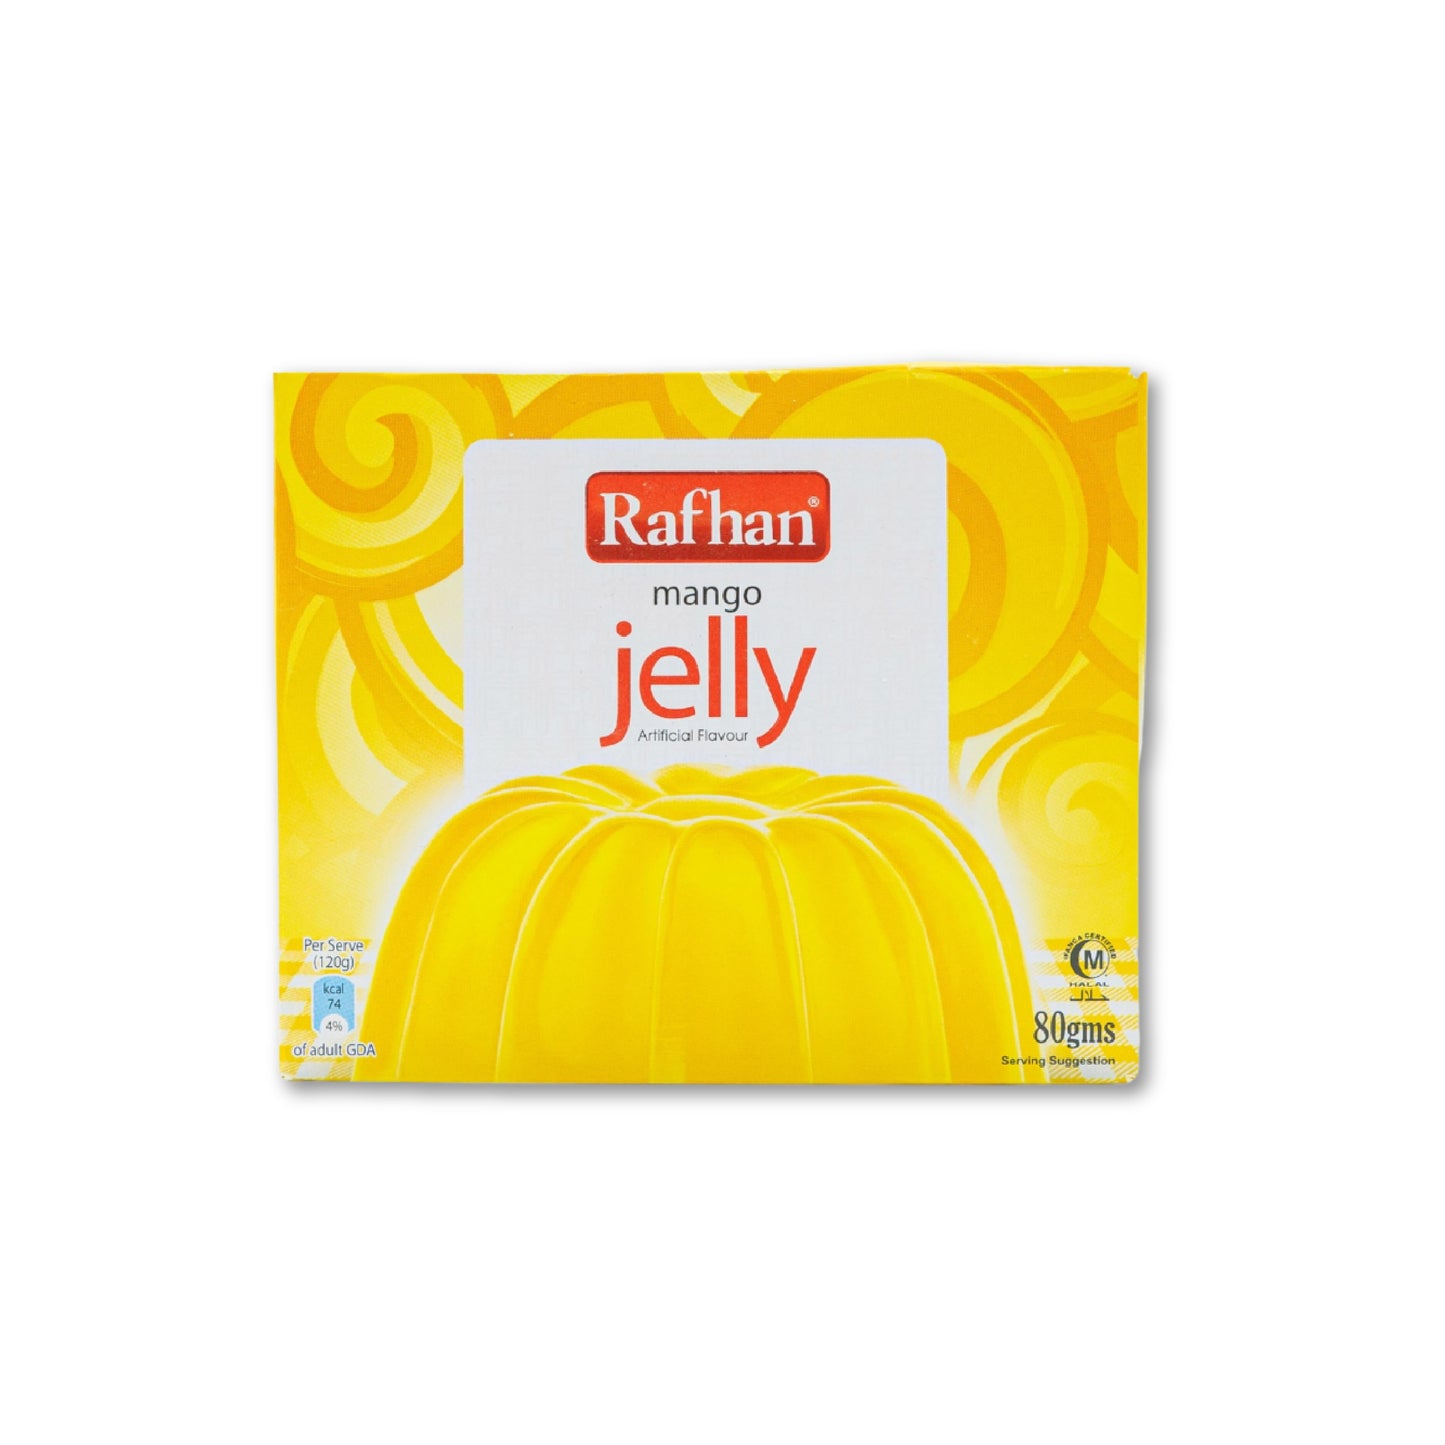 Rafhan Mango Jelly